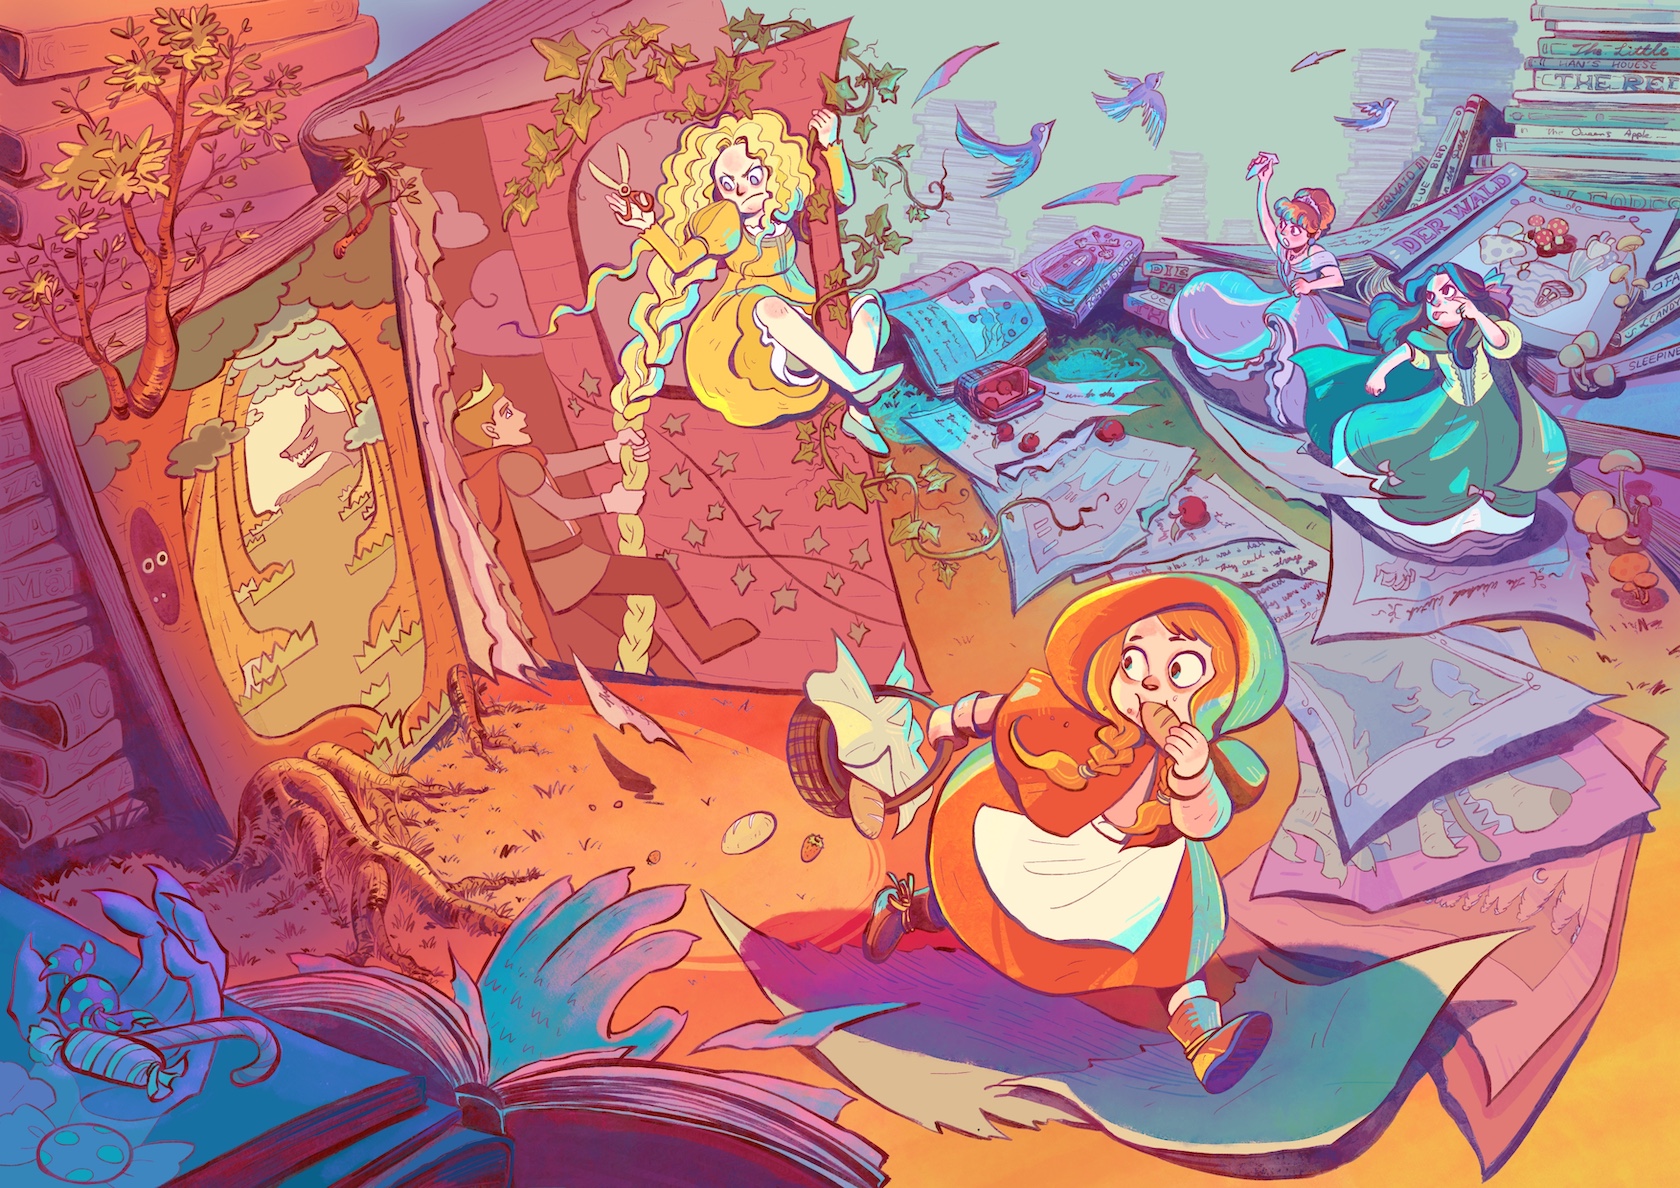 Children's book illustration (fairytale, red riding hood, cinderella, snow white, rapunzel) by H. Chia 笳彧